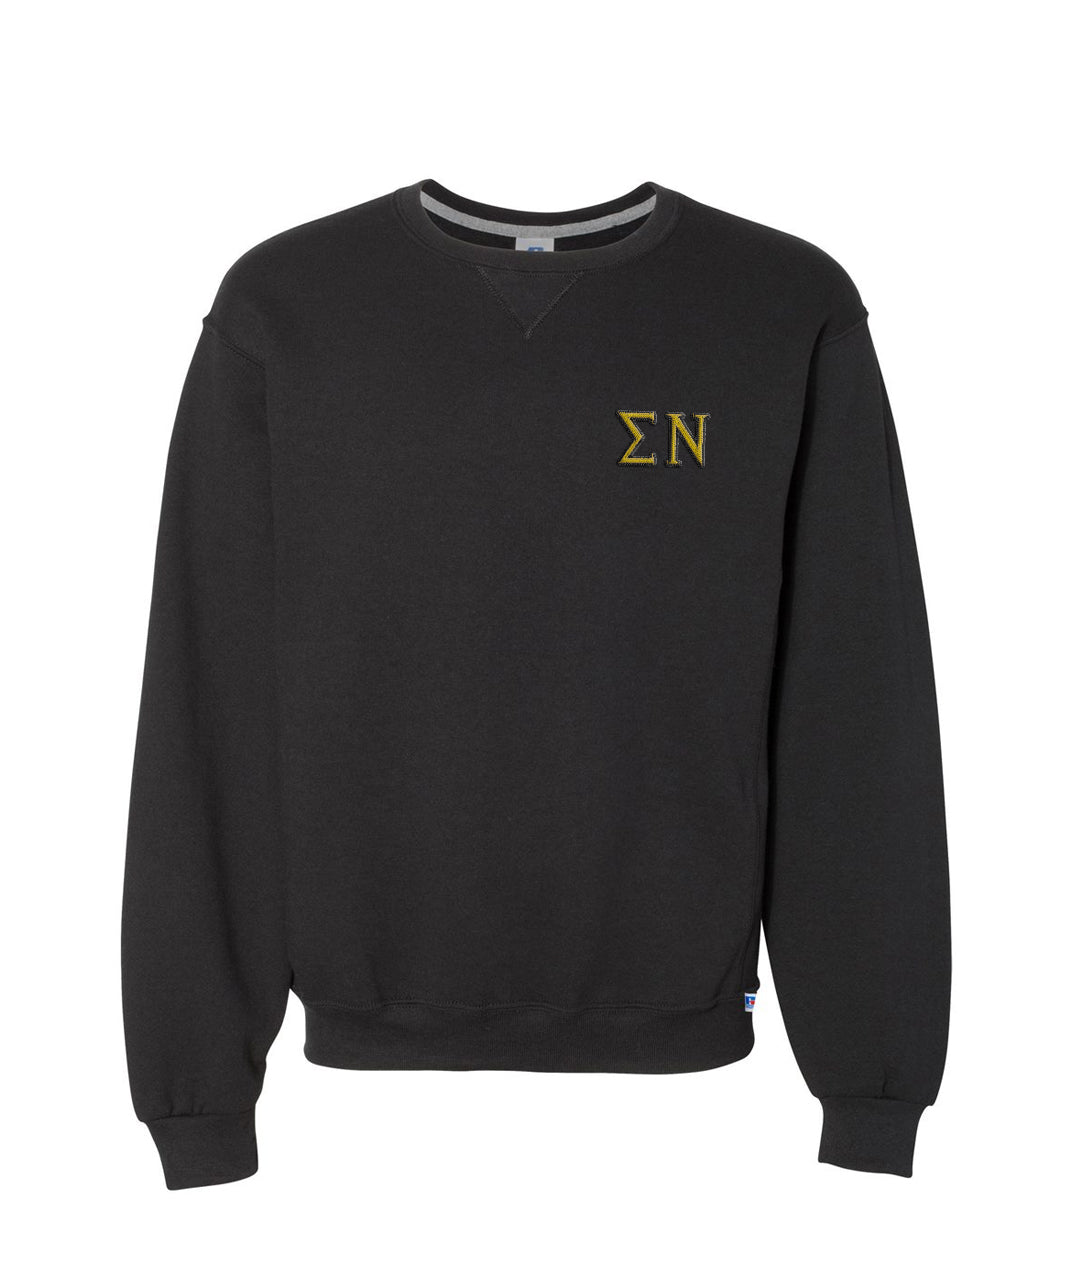 Sigma Nu Embroidered Crewneck Sweatshirt